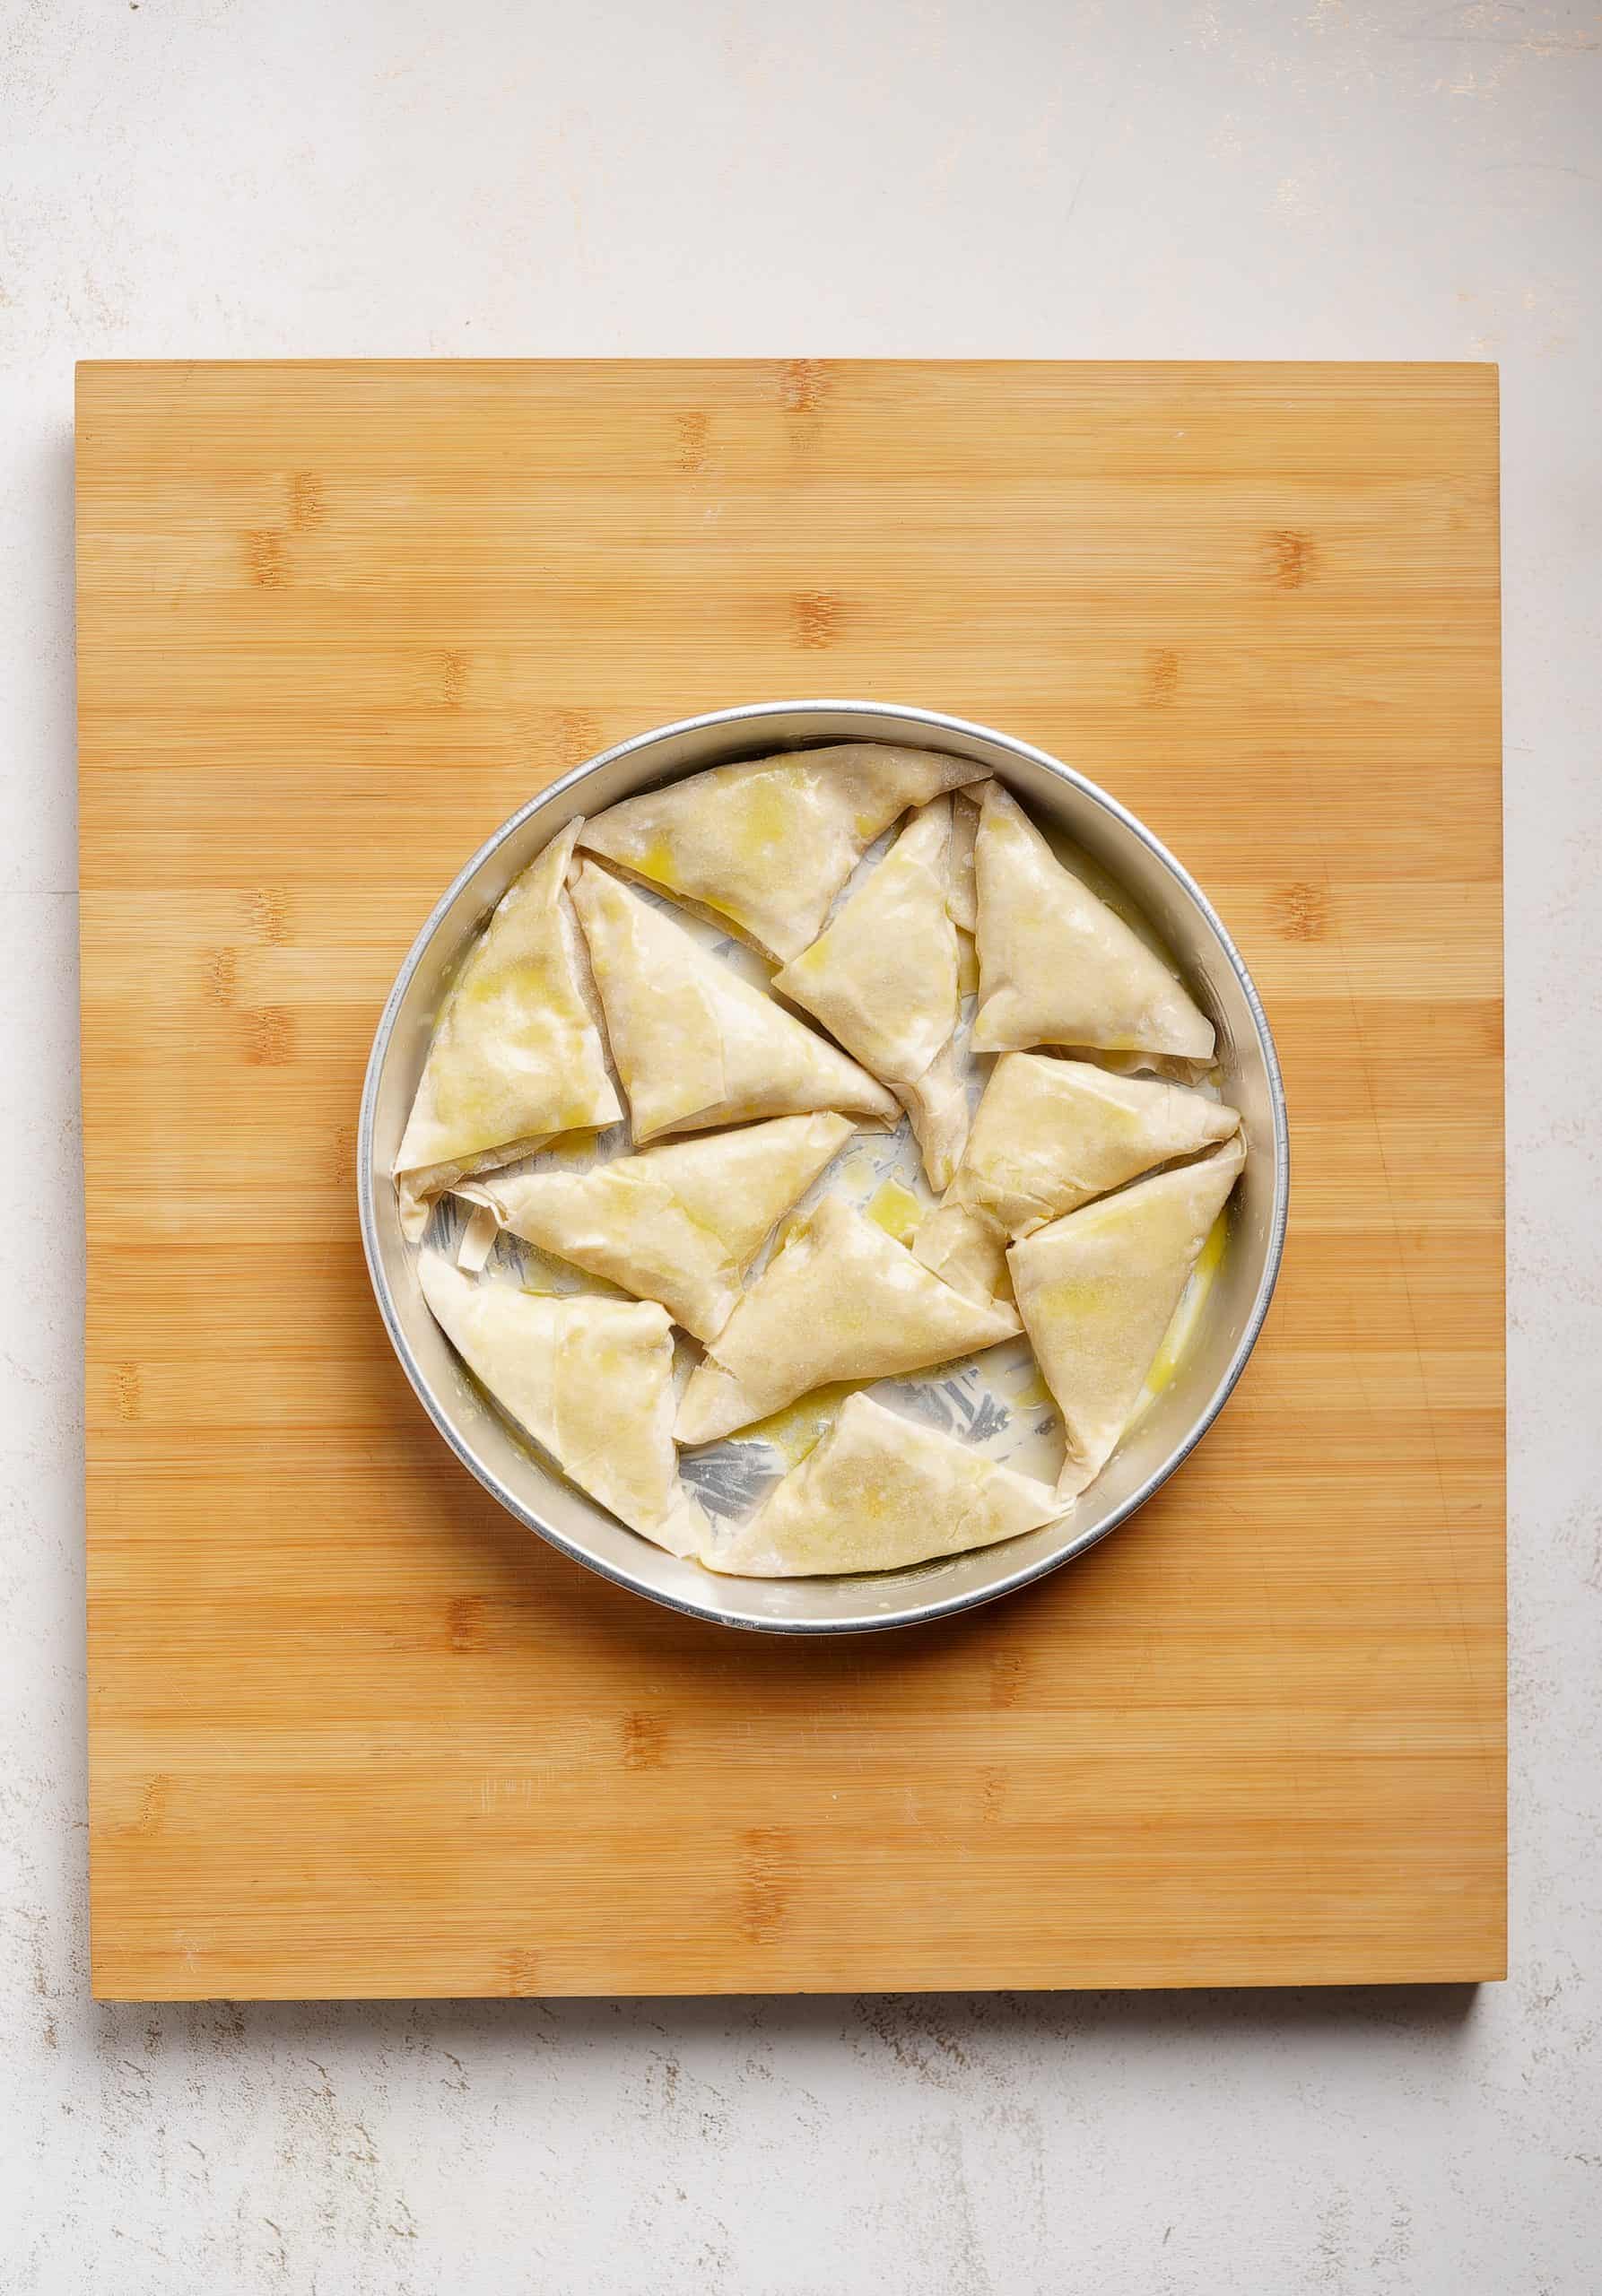 Mini Spanakopita Triangles Recipe (Spanakopitakia - Greek spinach triangles) in the baking tray